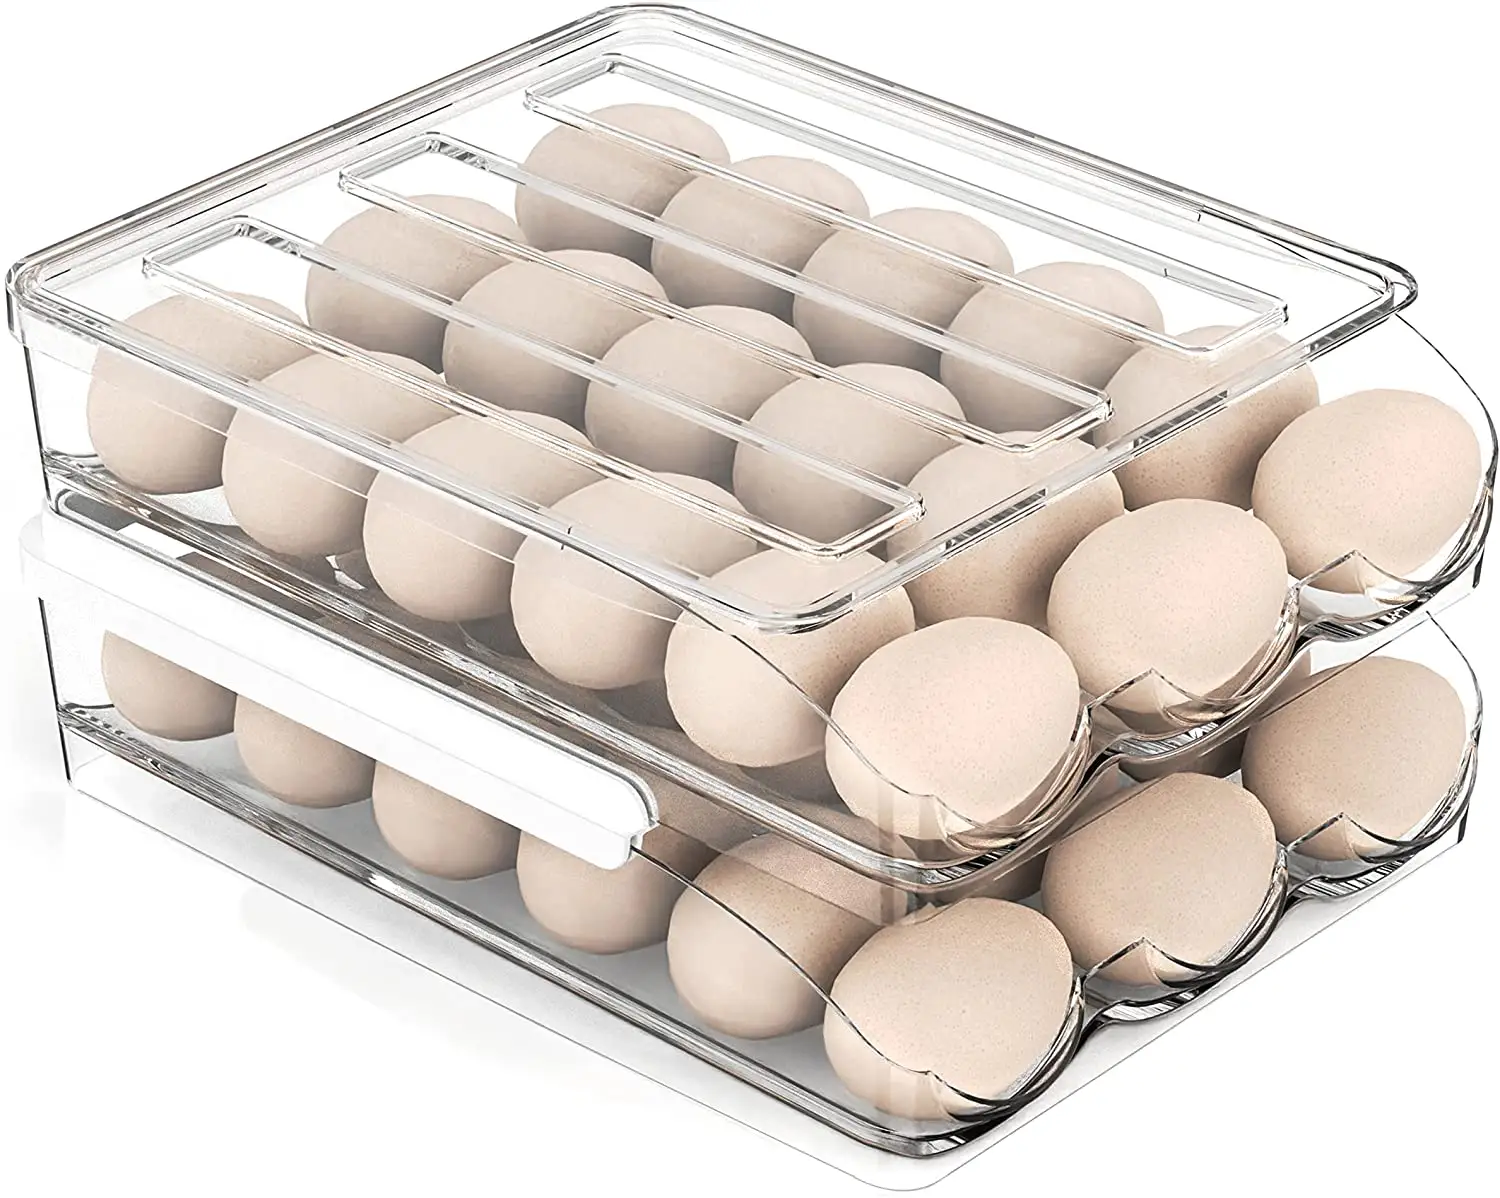 Luoji Egg Container Egg Tray For Refrigerator Portable Egg Storage Box Holder Kitchen Fridge Egg Organizer Protect And Keep Egg Fresh 